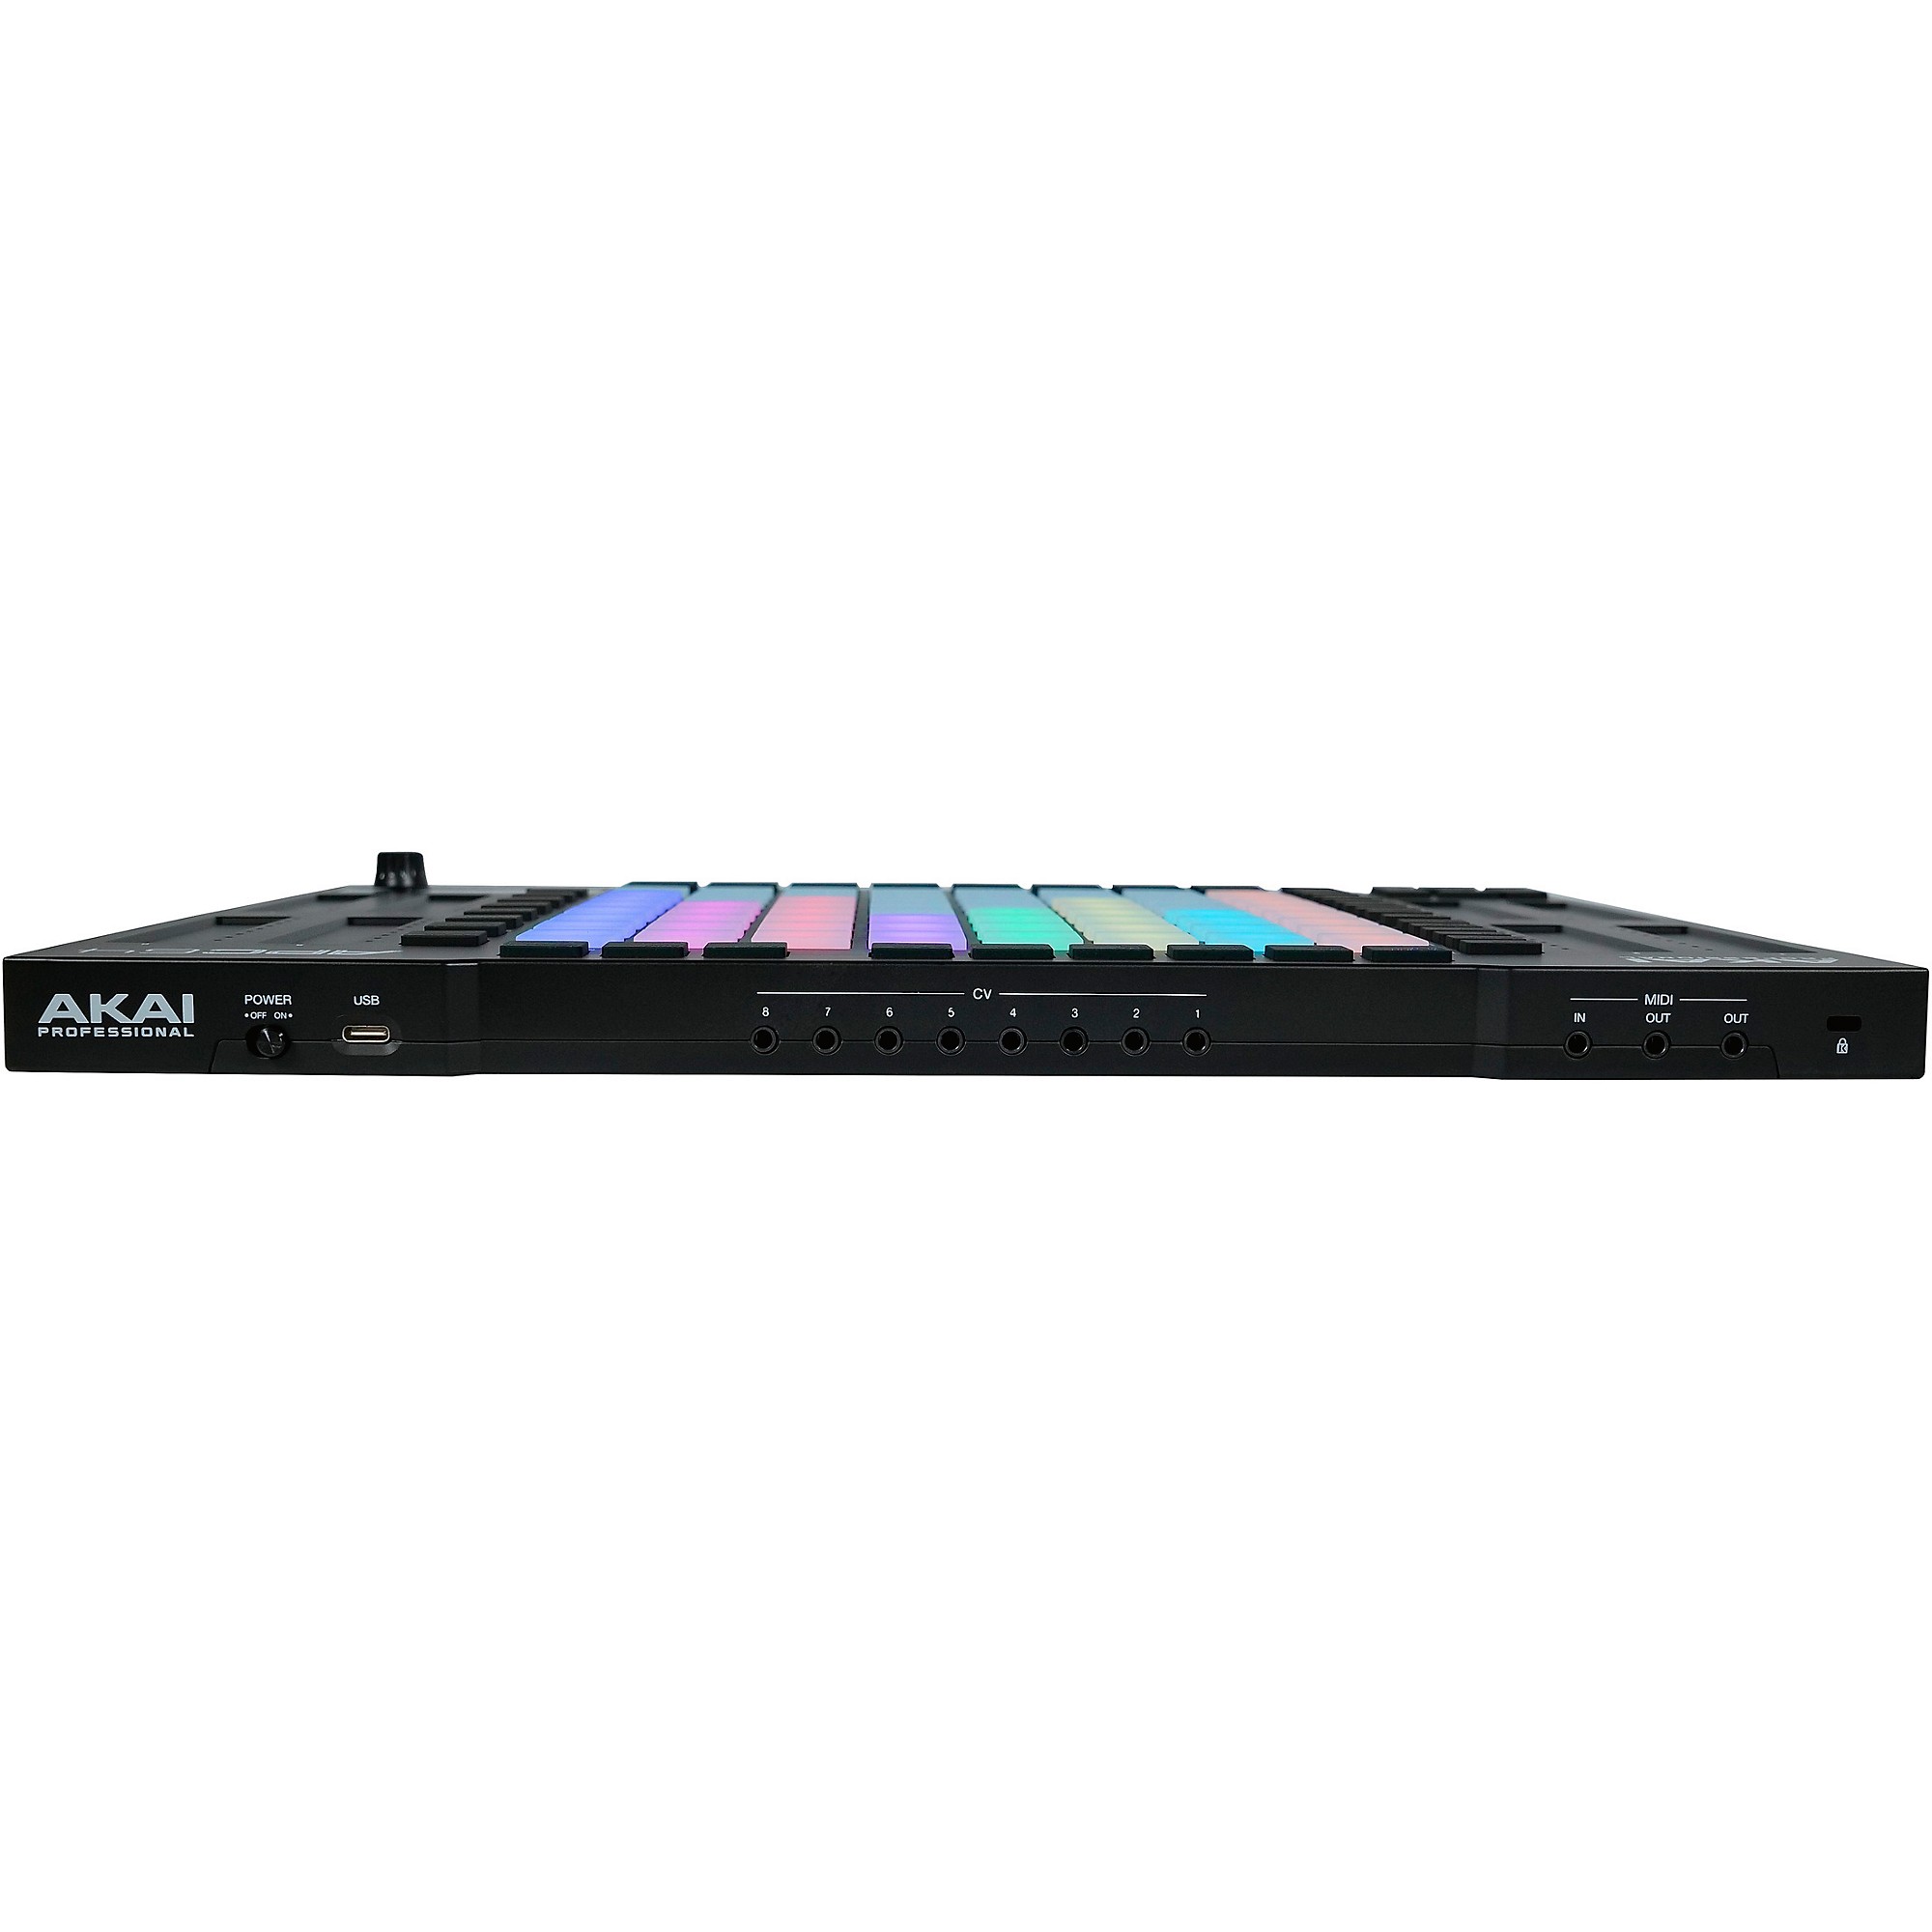 Akai Professional APC64 Ableton Live Pad Controller and Standalone 